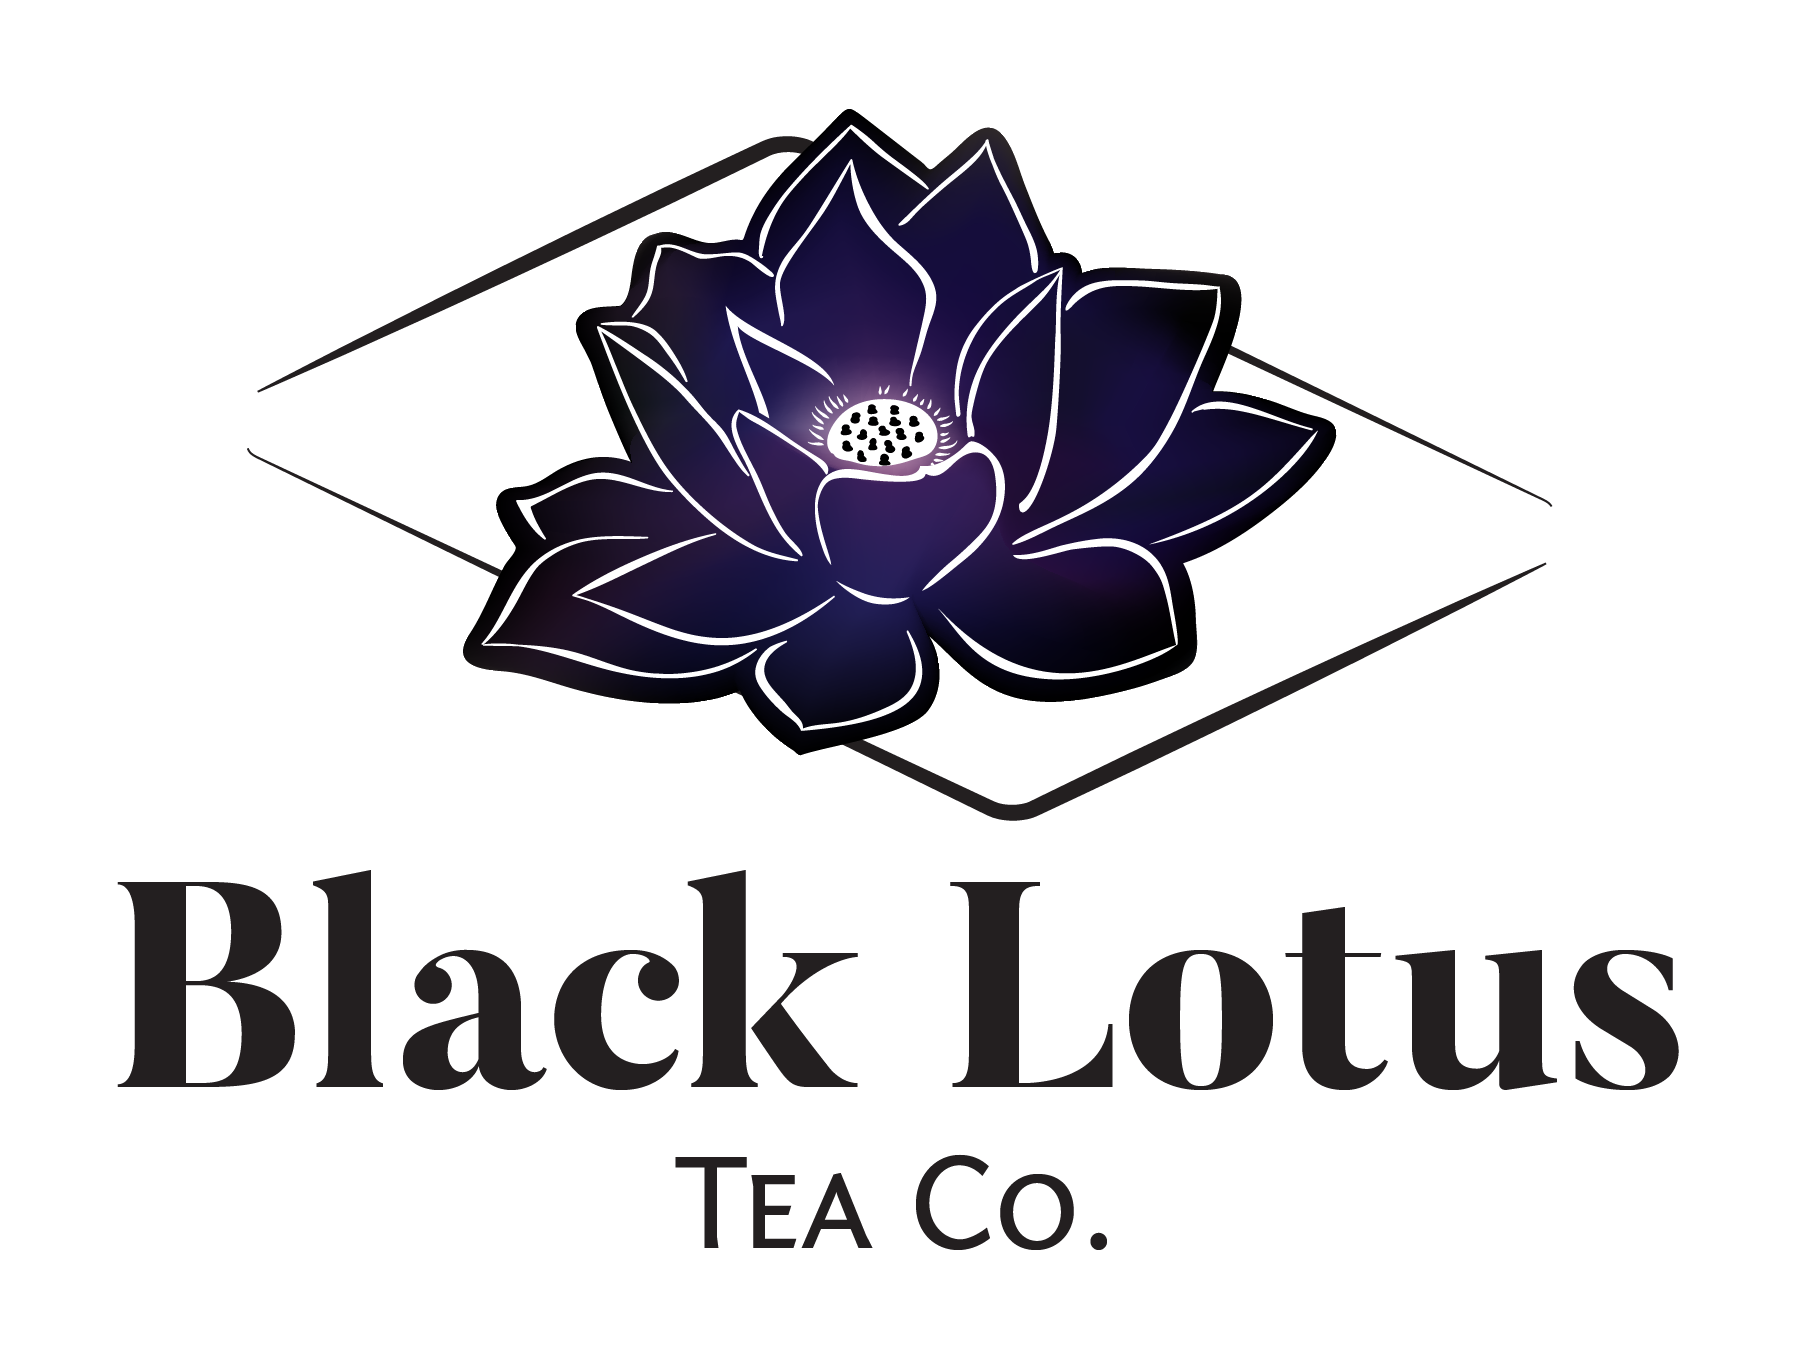 Black Lotus Tea Company - Tea blends for those who love D&D